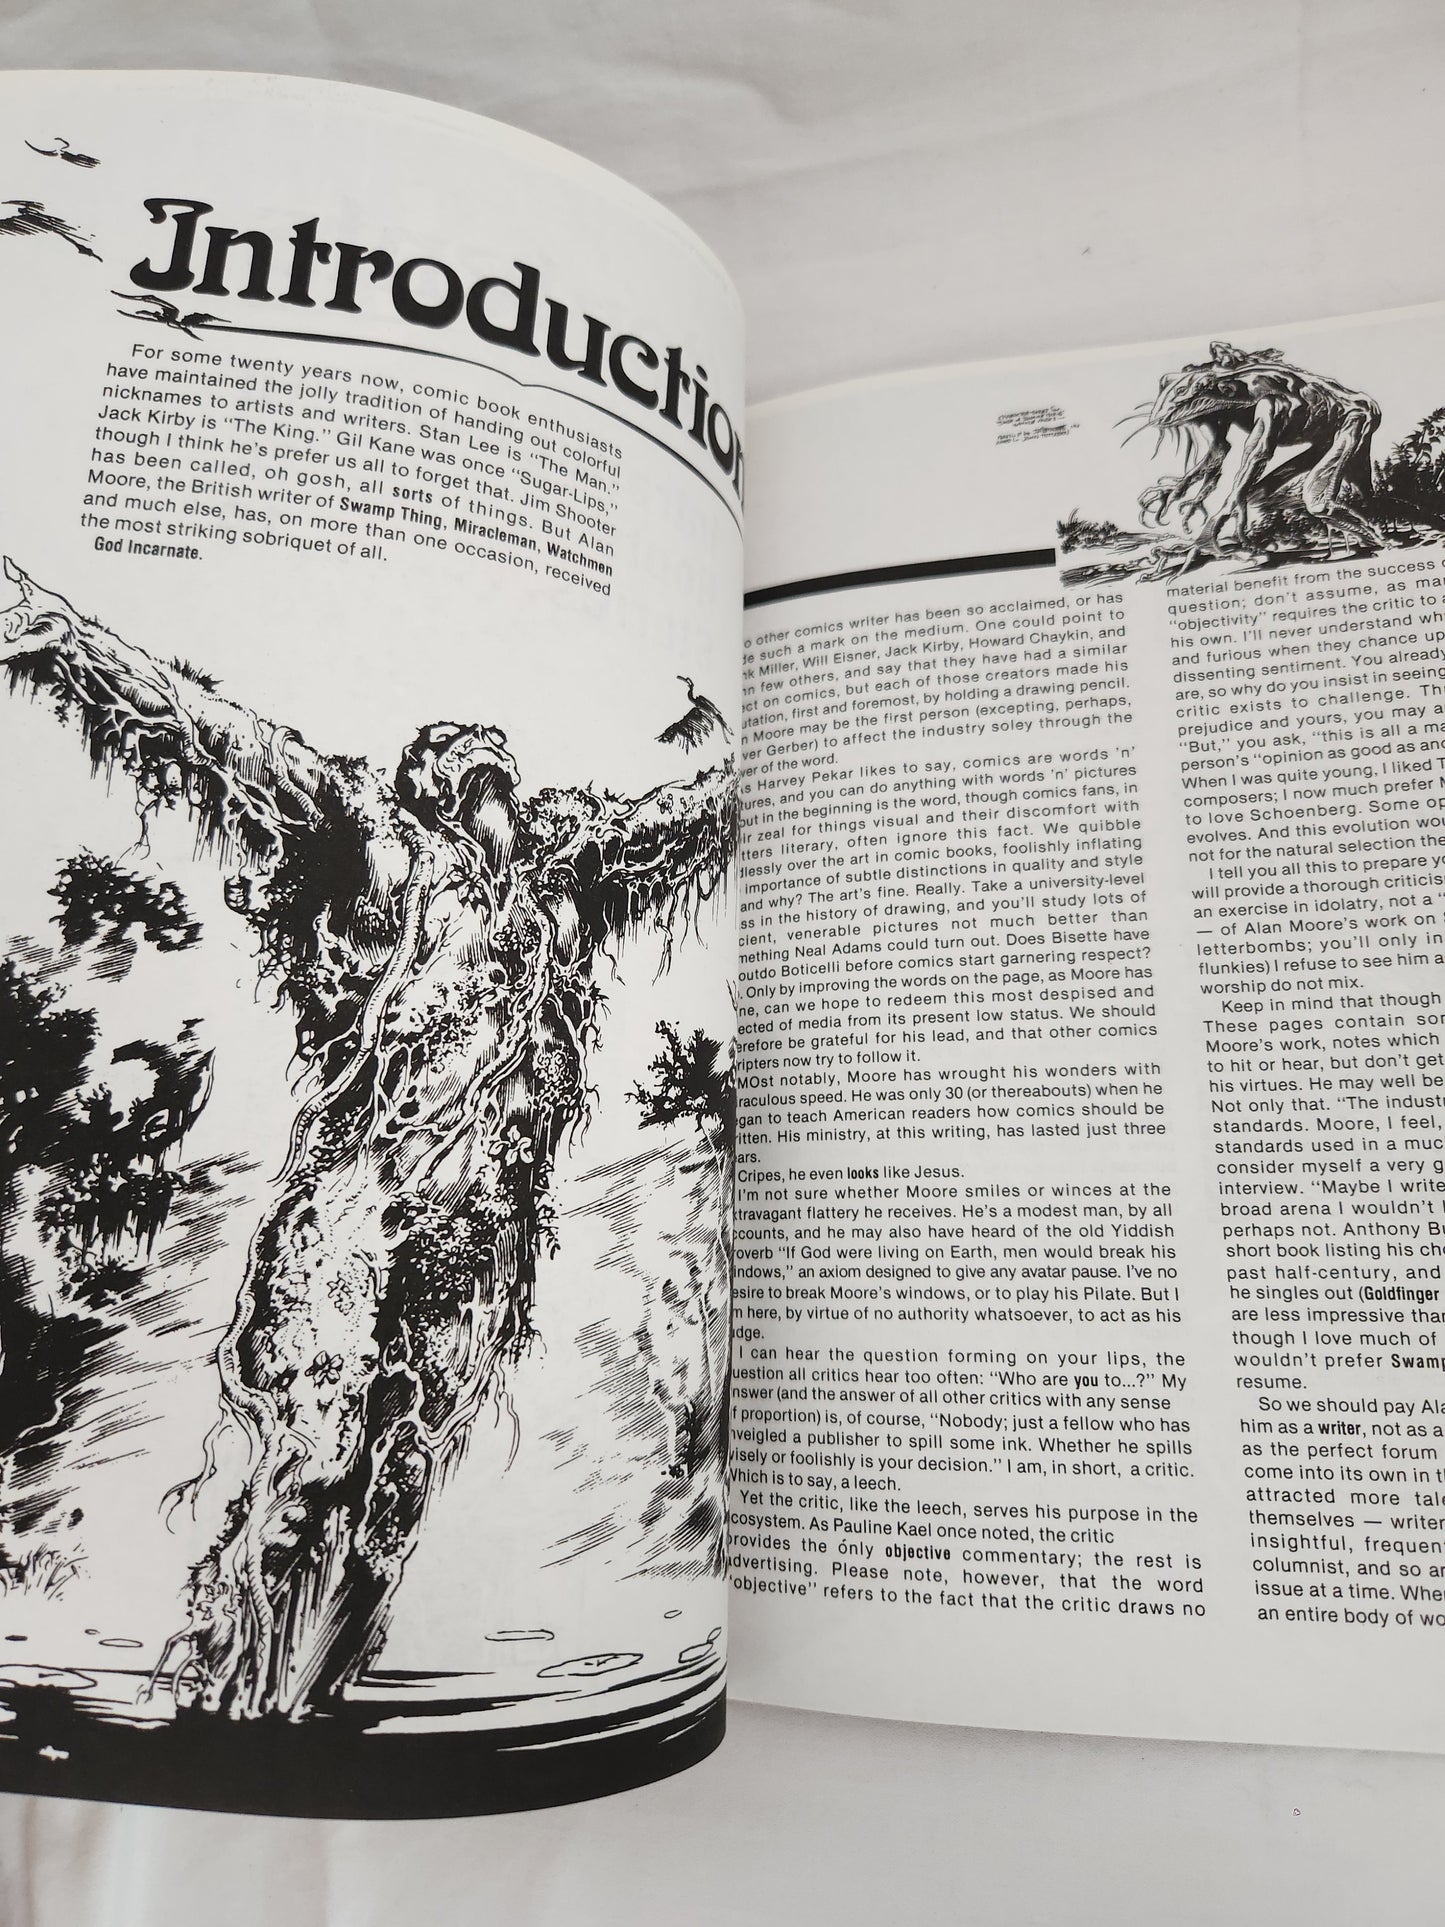 1987 Swamp Thing: Critics Choice Files Magazine Spotlight by Martin Cannon